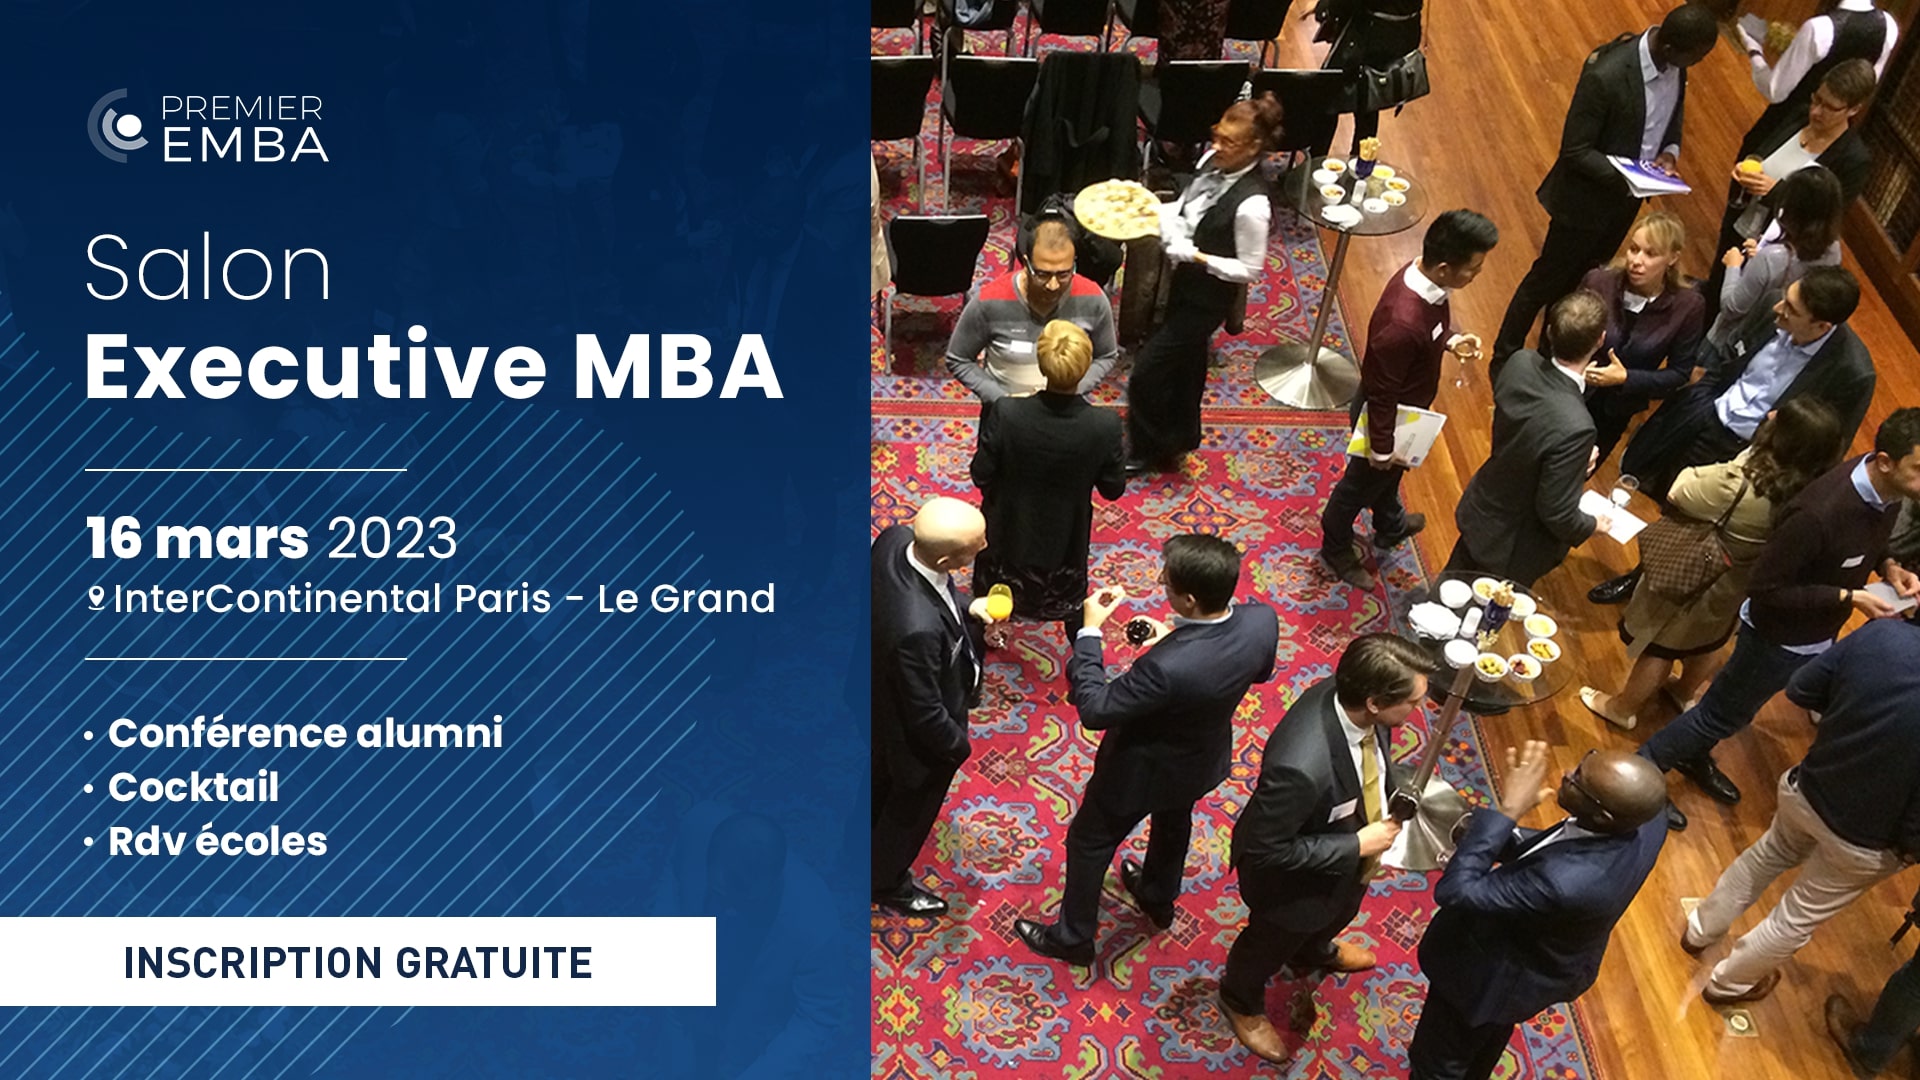 Salon Executive MBA – Premier EMBA, Paris, France